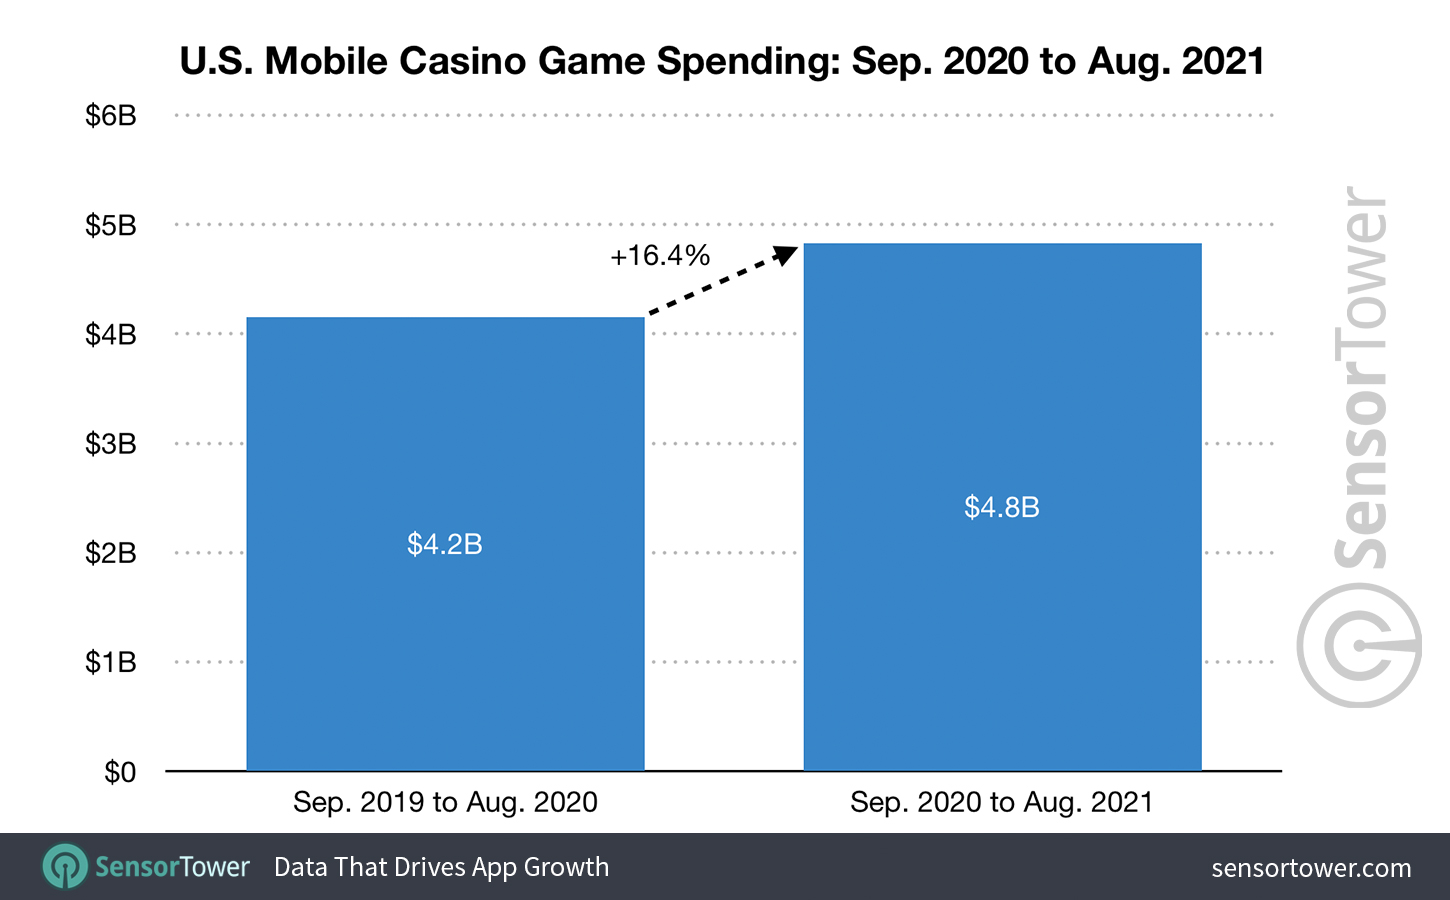 U.S. Mobile Casino Game Spending Revenue: September 1, 2020 to August 31, 2021